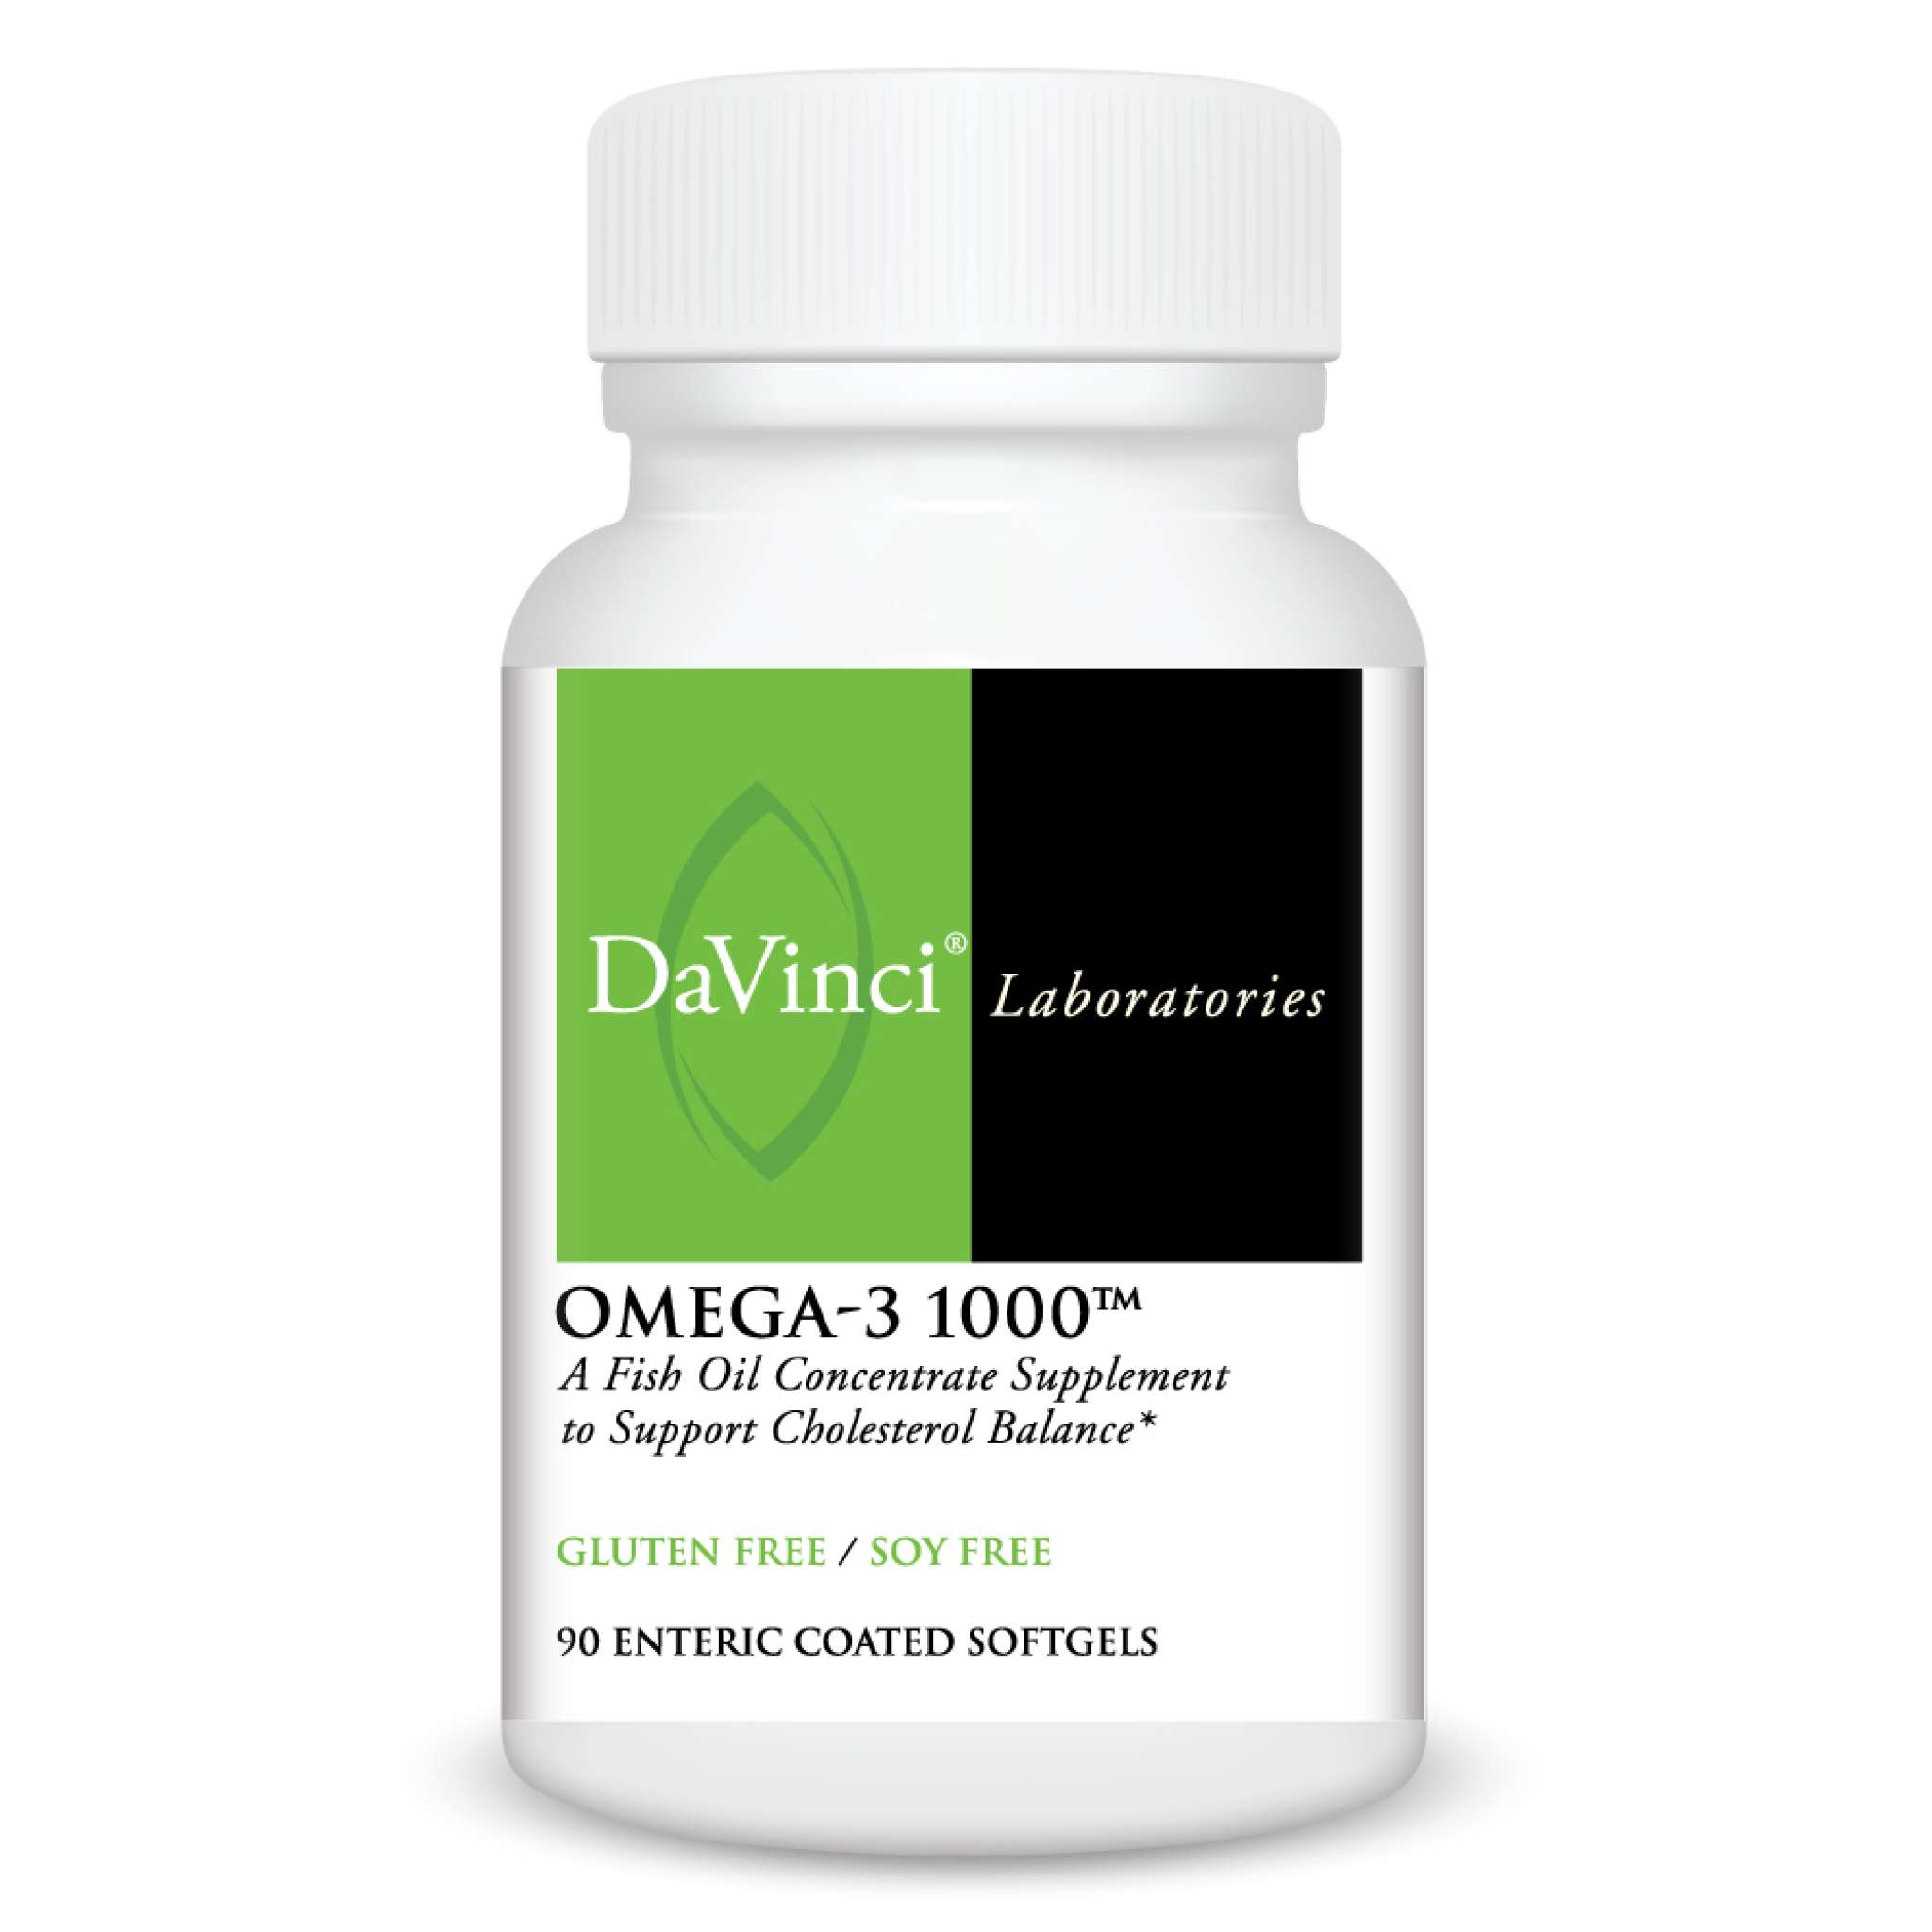 Davinci Laboratories - Omega 3 1000 Ent Coat